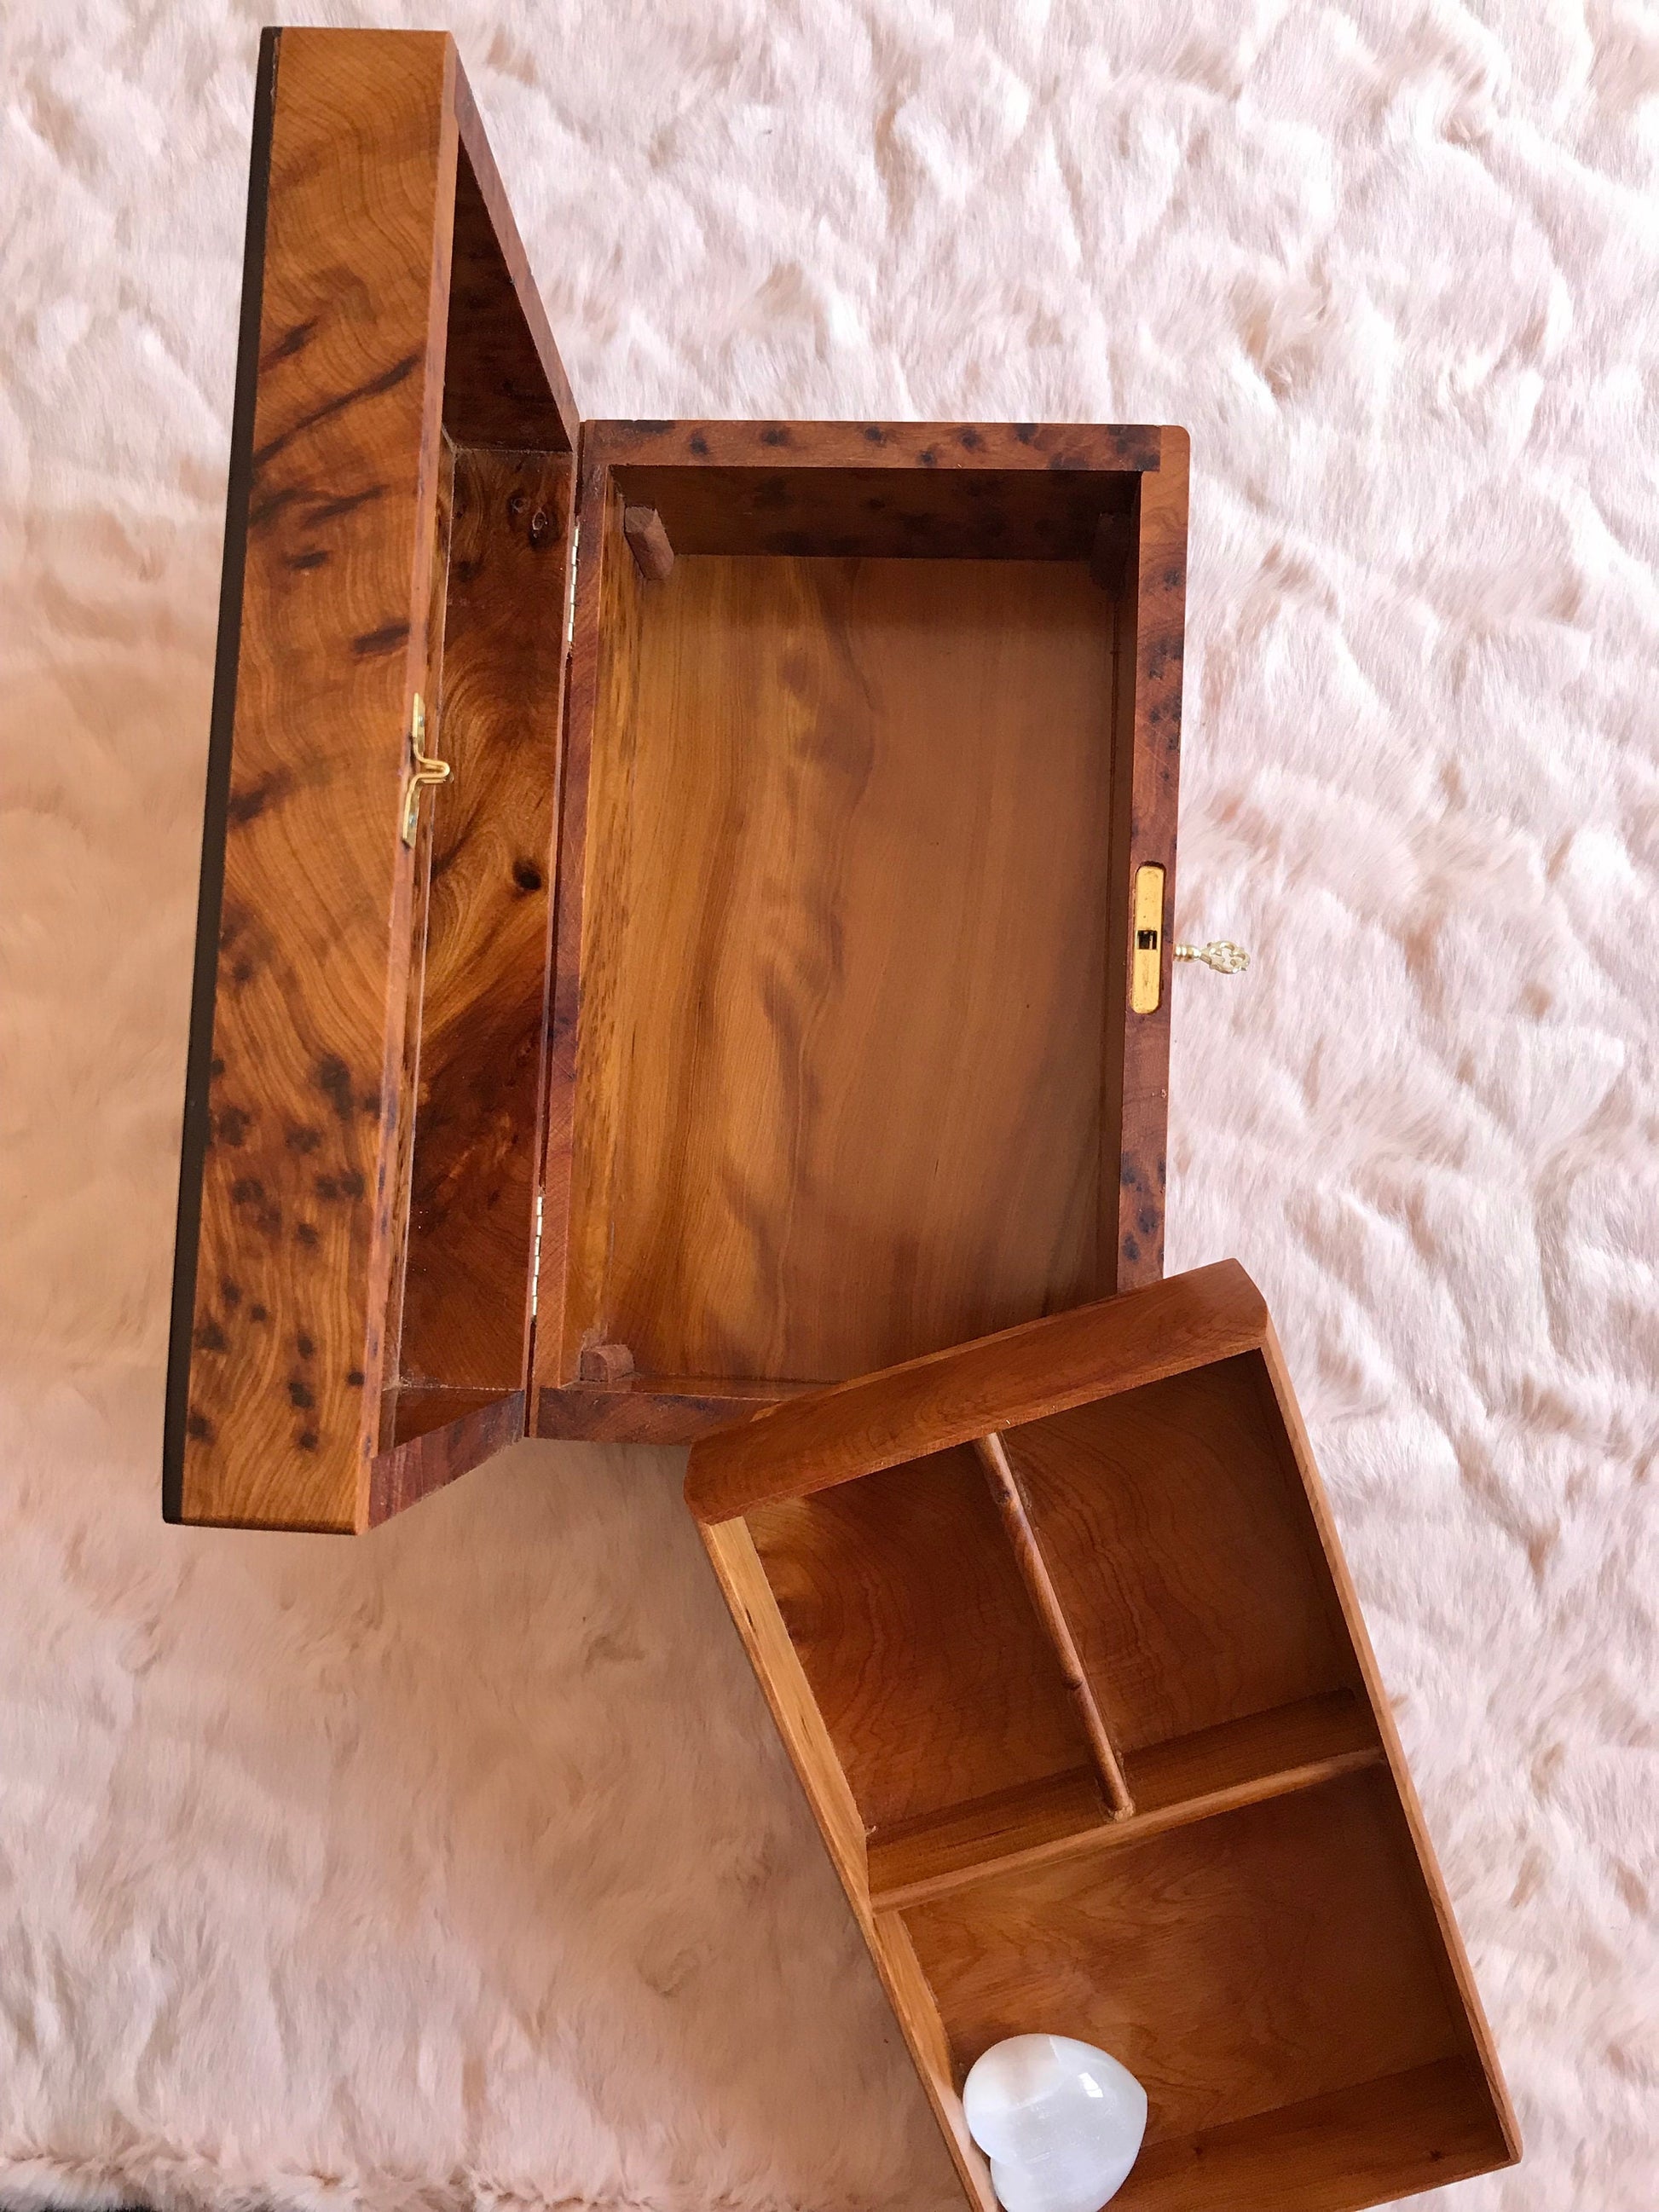 10"x6" Moroccan jewellery Box,large lockable thuya wooden burl Jewelry Box organizer with key,Christmas Couples gift,wedding wood memory box